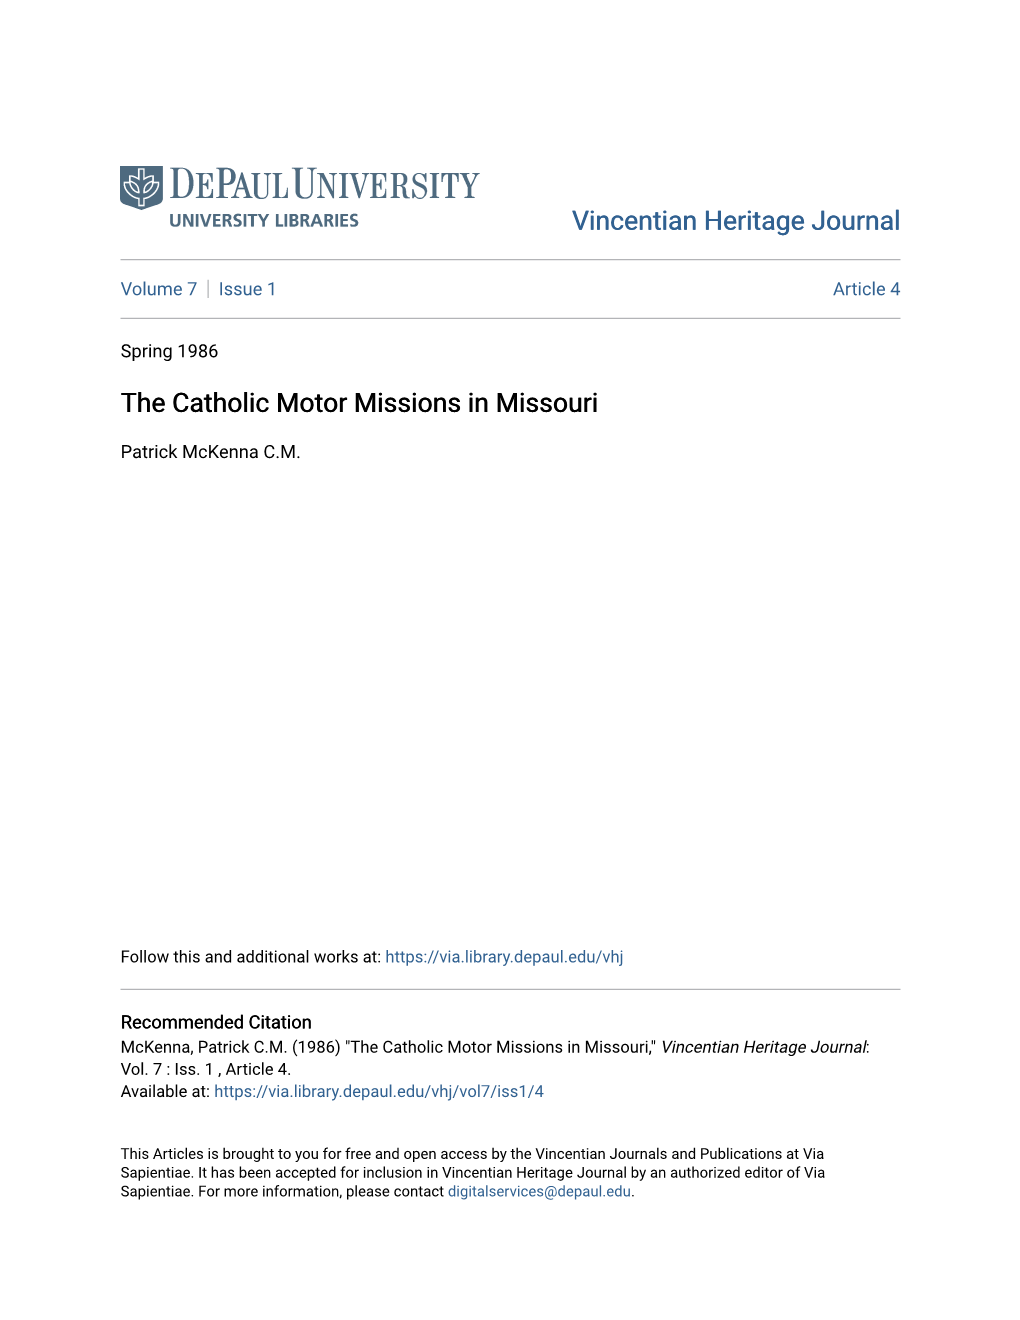 The Catholic Motor Missions in Missouri